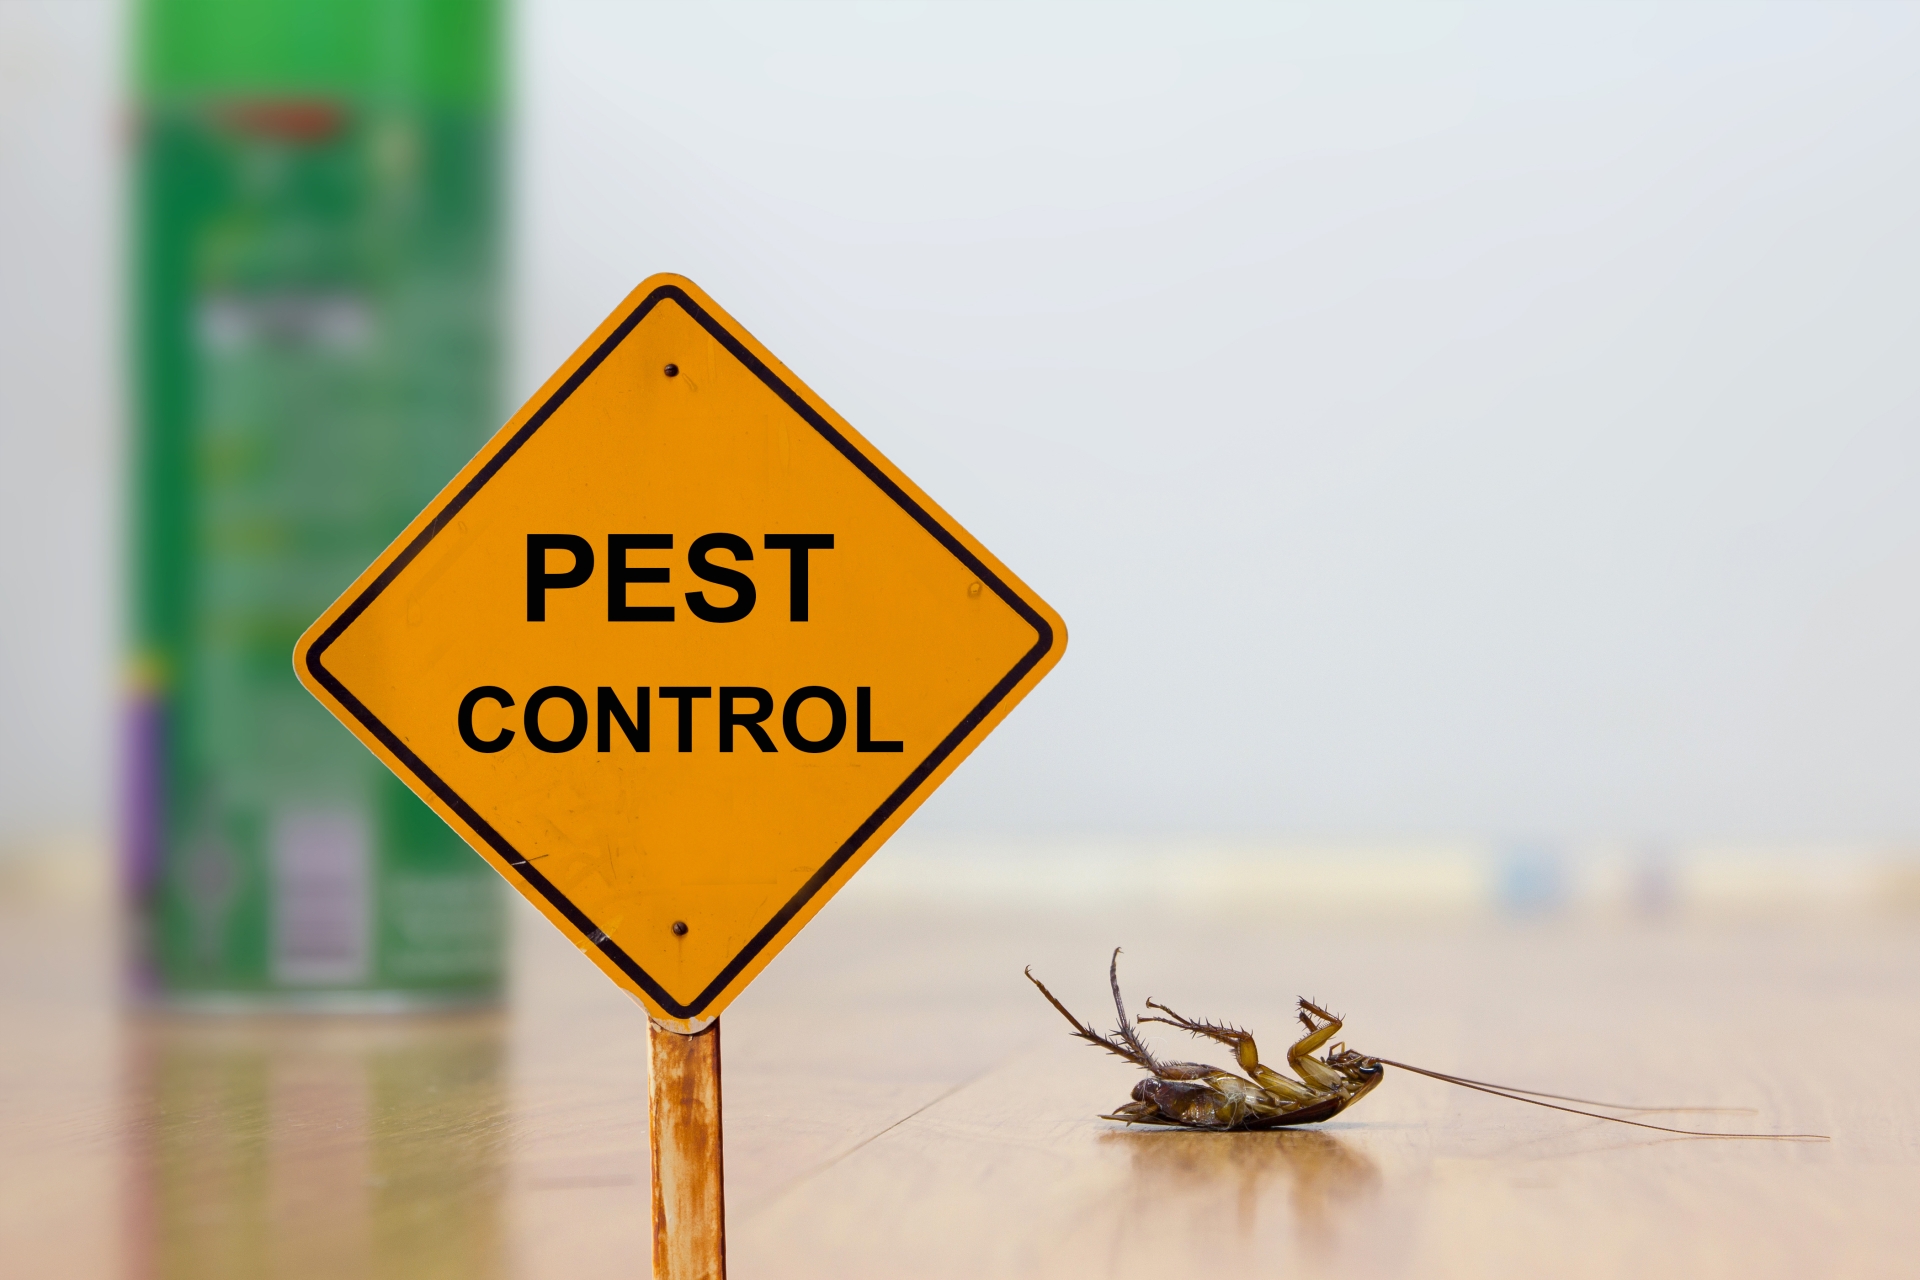 24 Hour Pest Control, Pest Control in Epsom, Horton, Longmead, KT19. Call Now 020 8166 9746